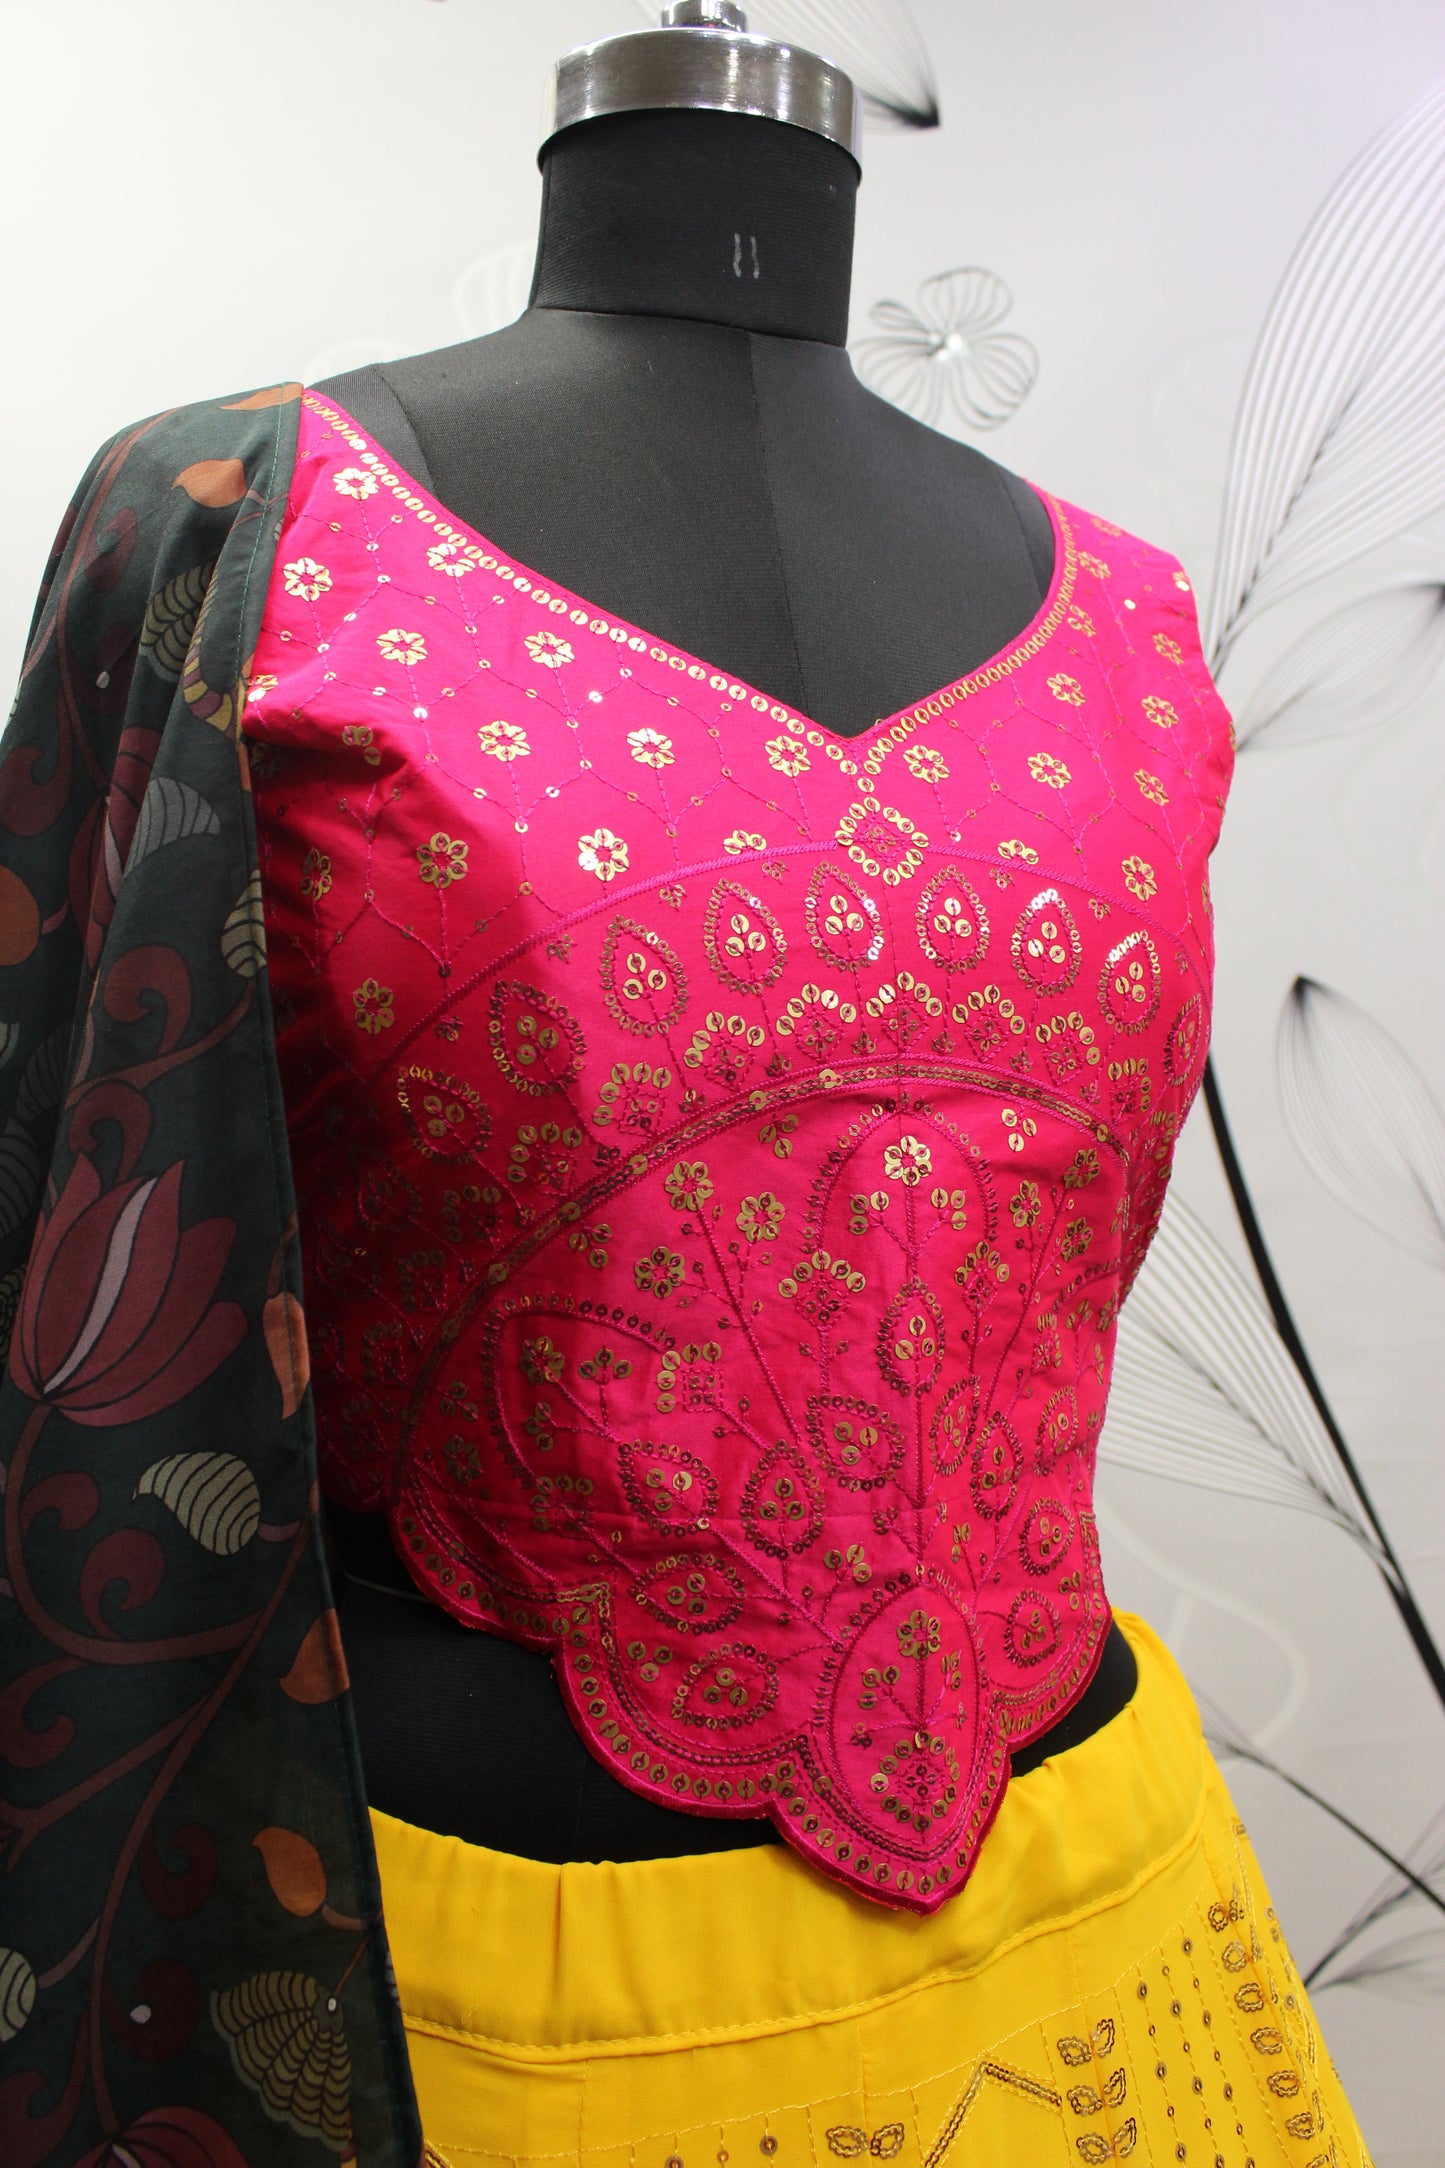 Dusty Yellow Color Designer Embroidered Sequince Work Lehenga Choli